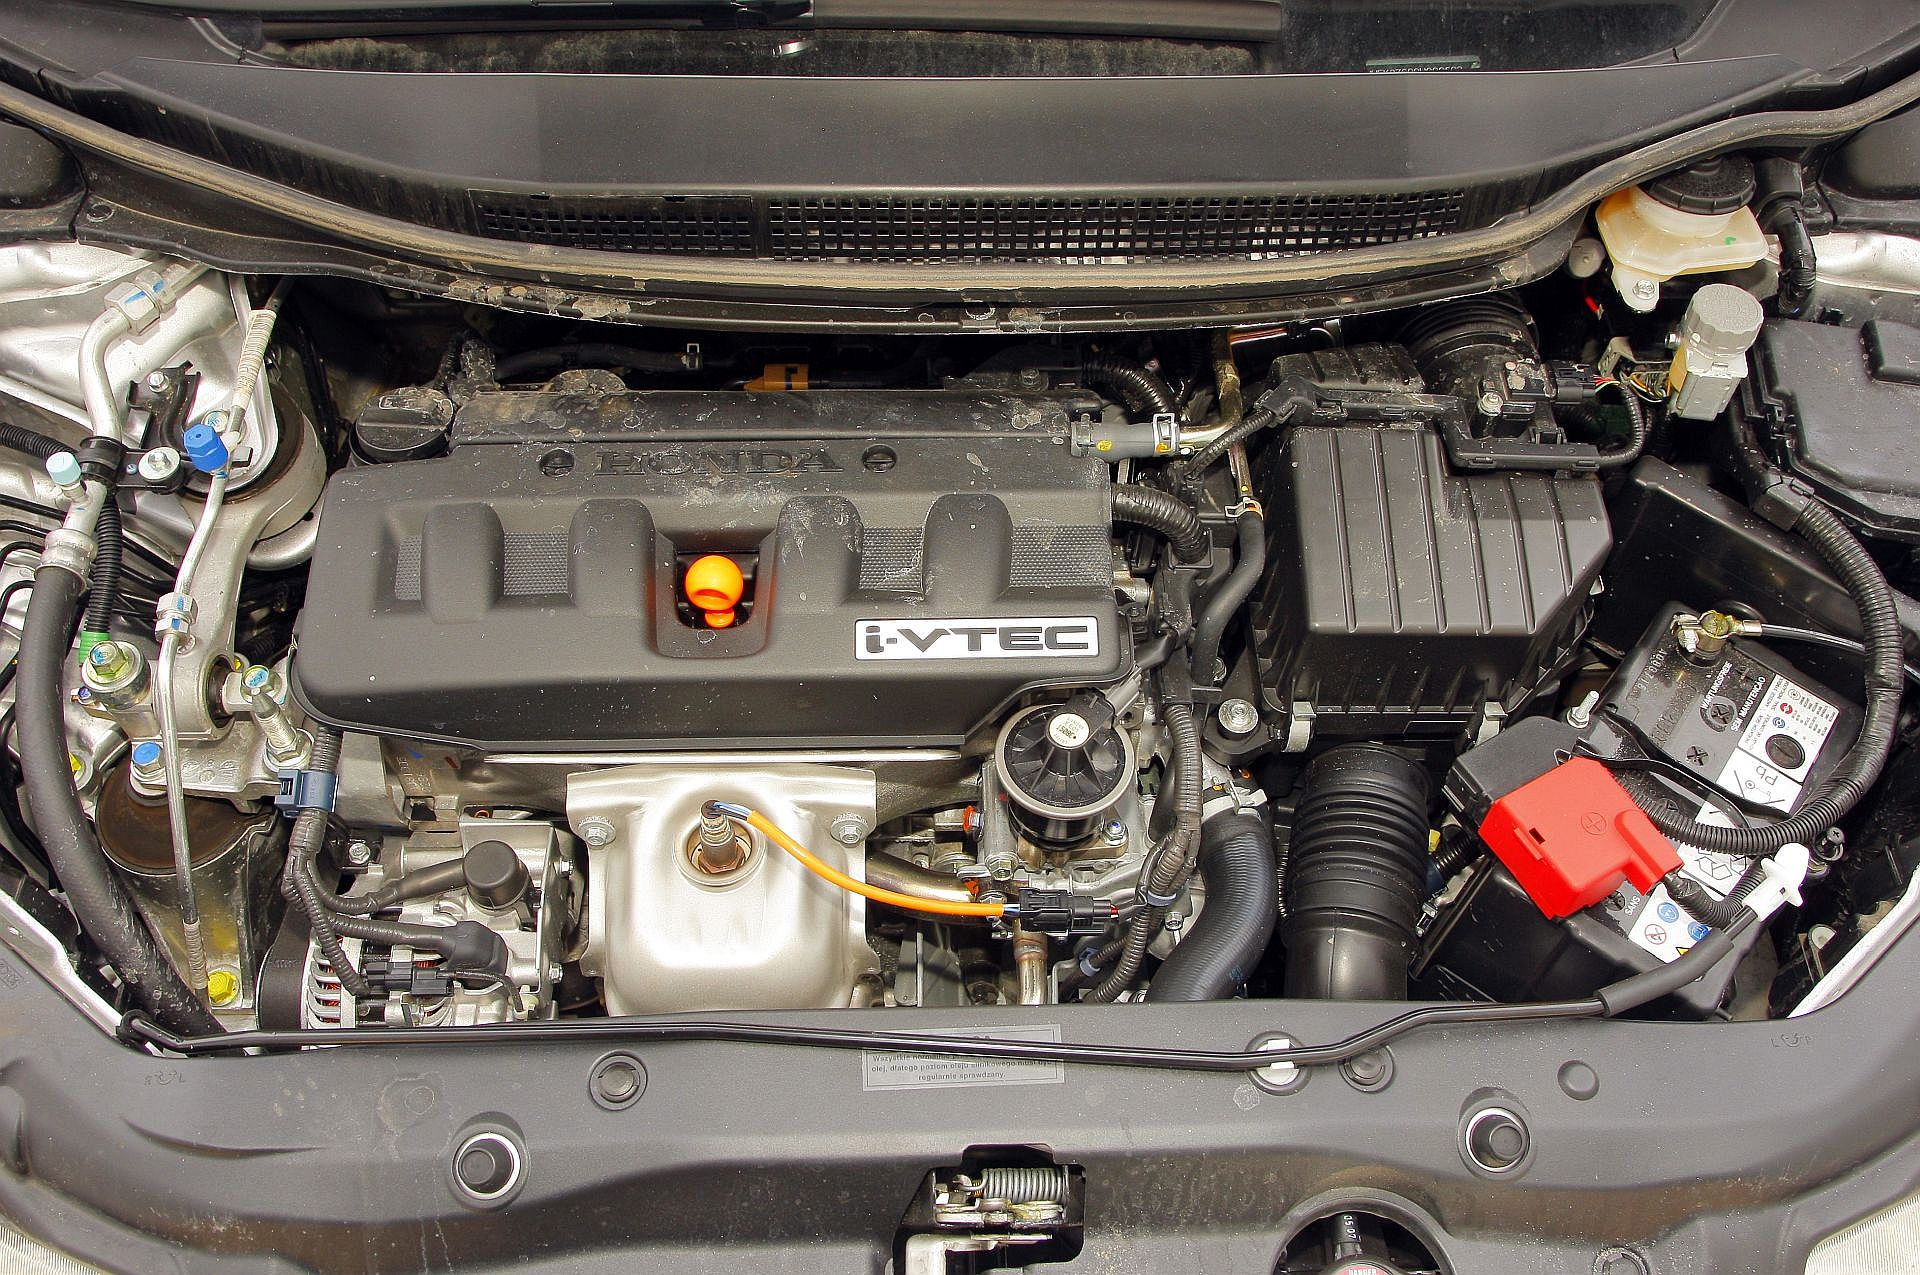 Używana Honda Civic VIII i Honda Civic IX którą